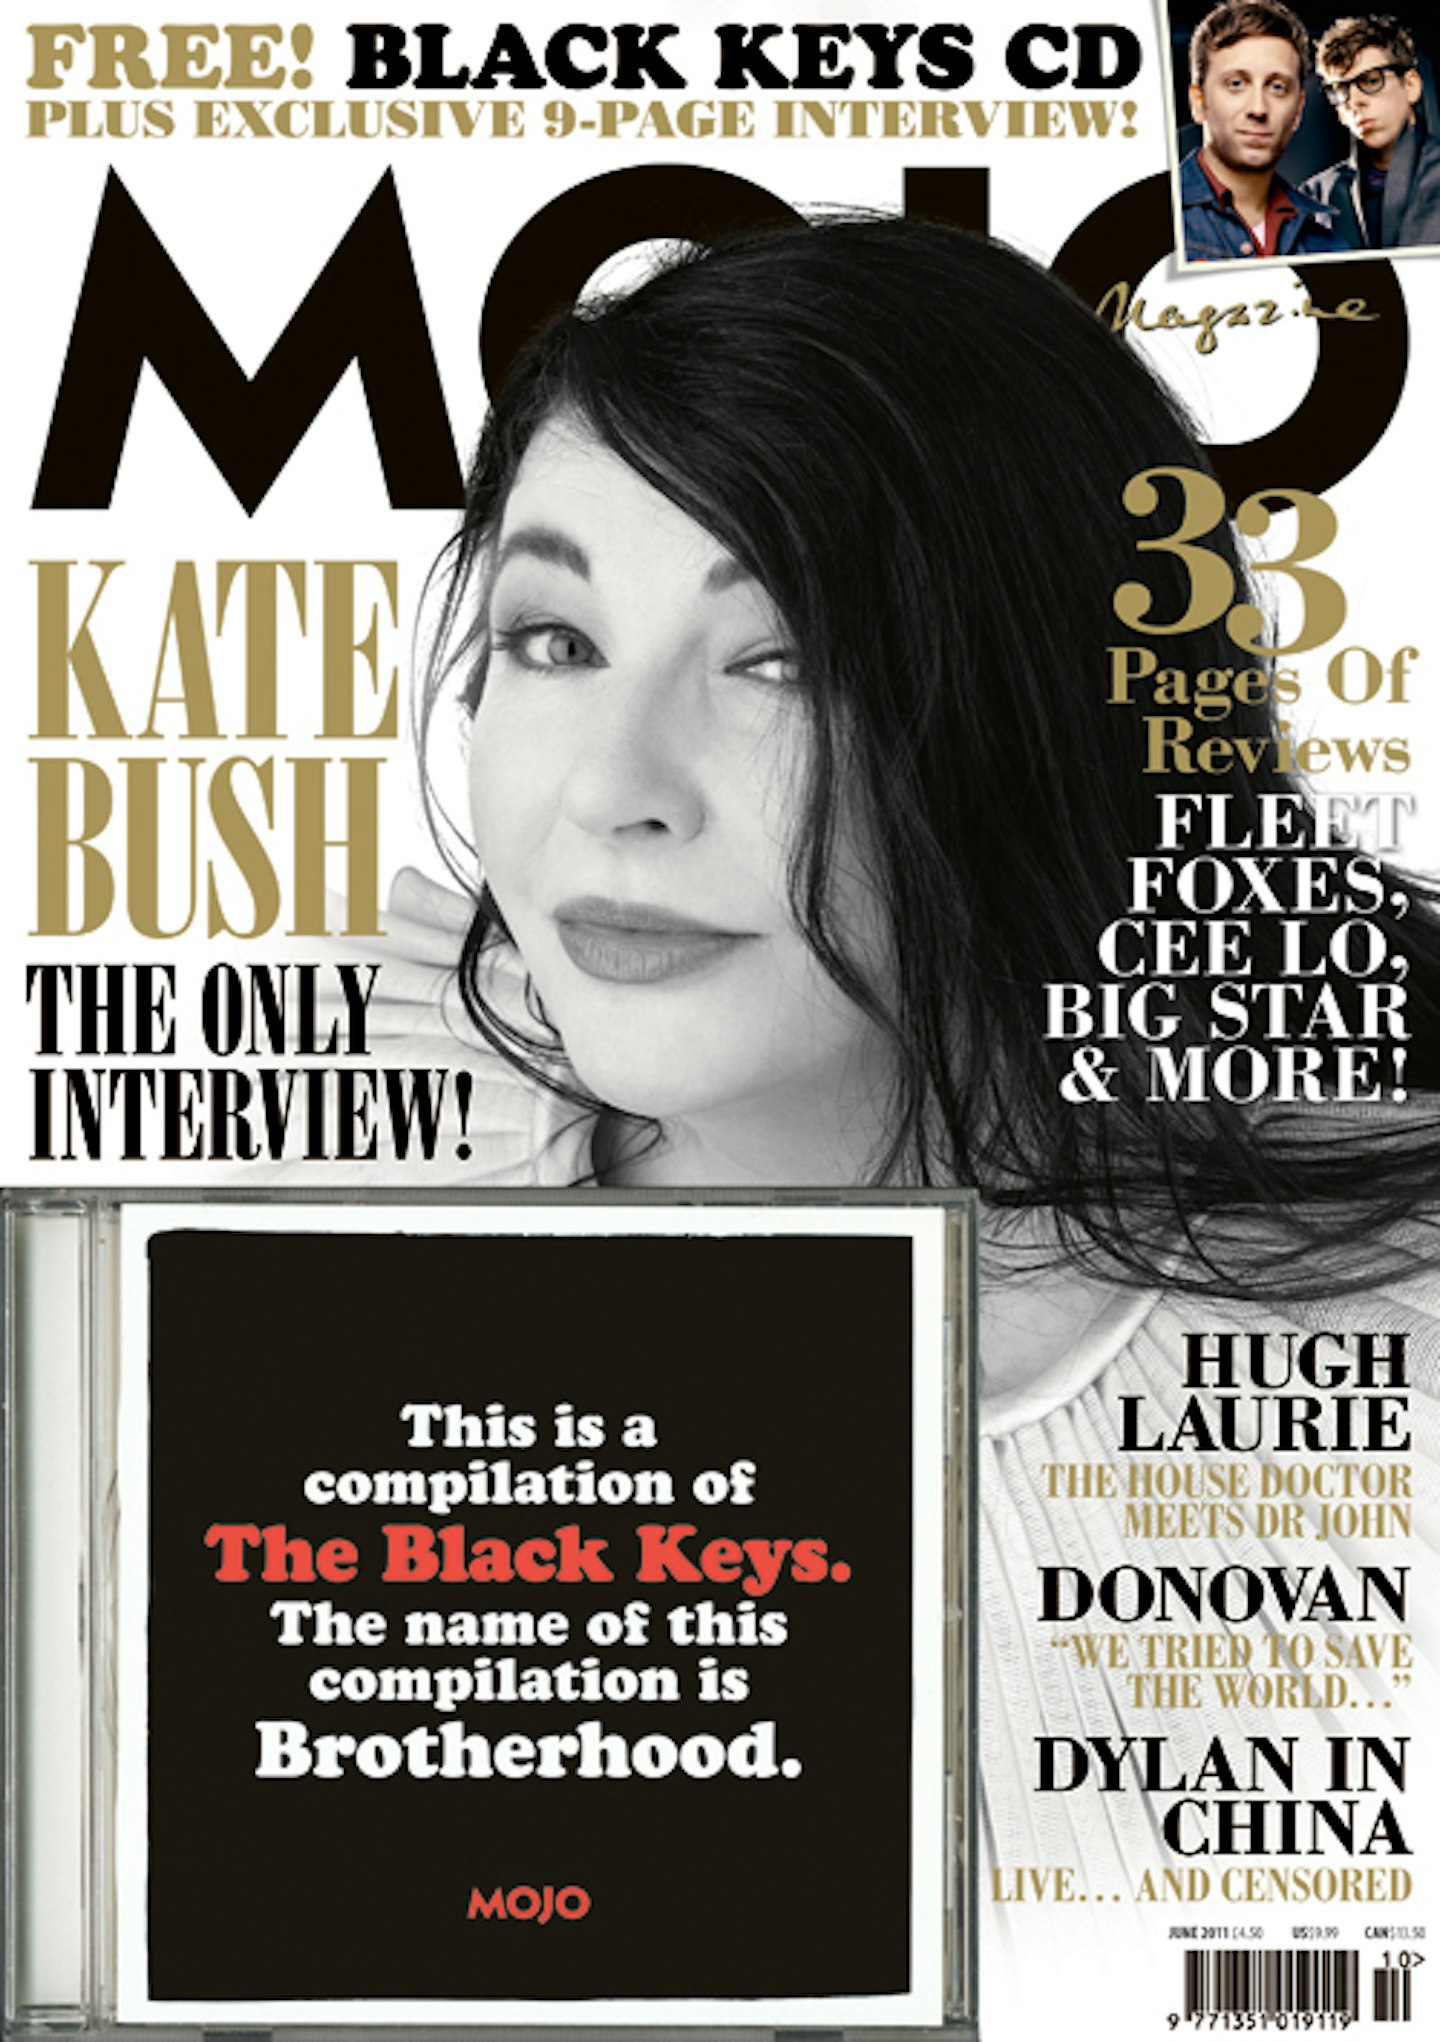 MOJO Issue 211 / June 2011